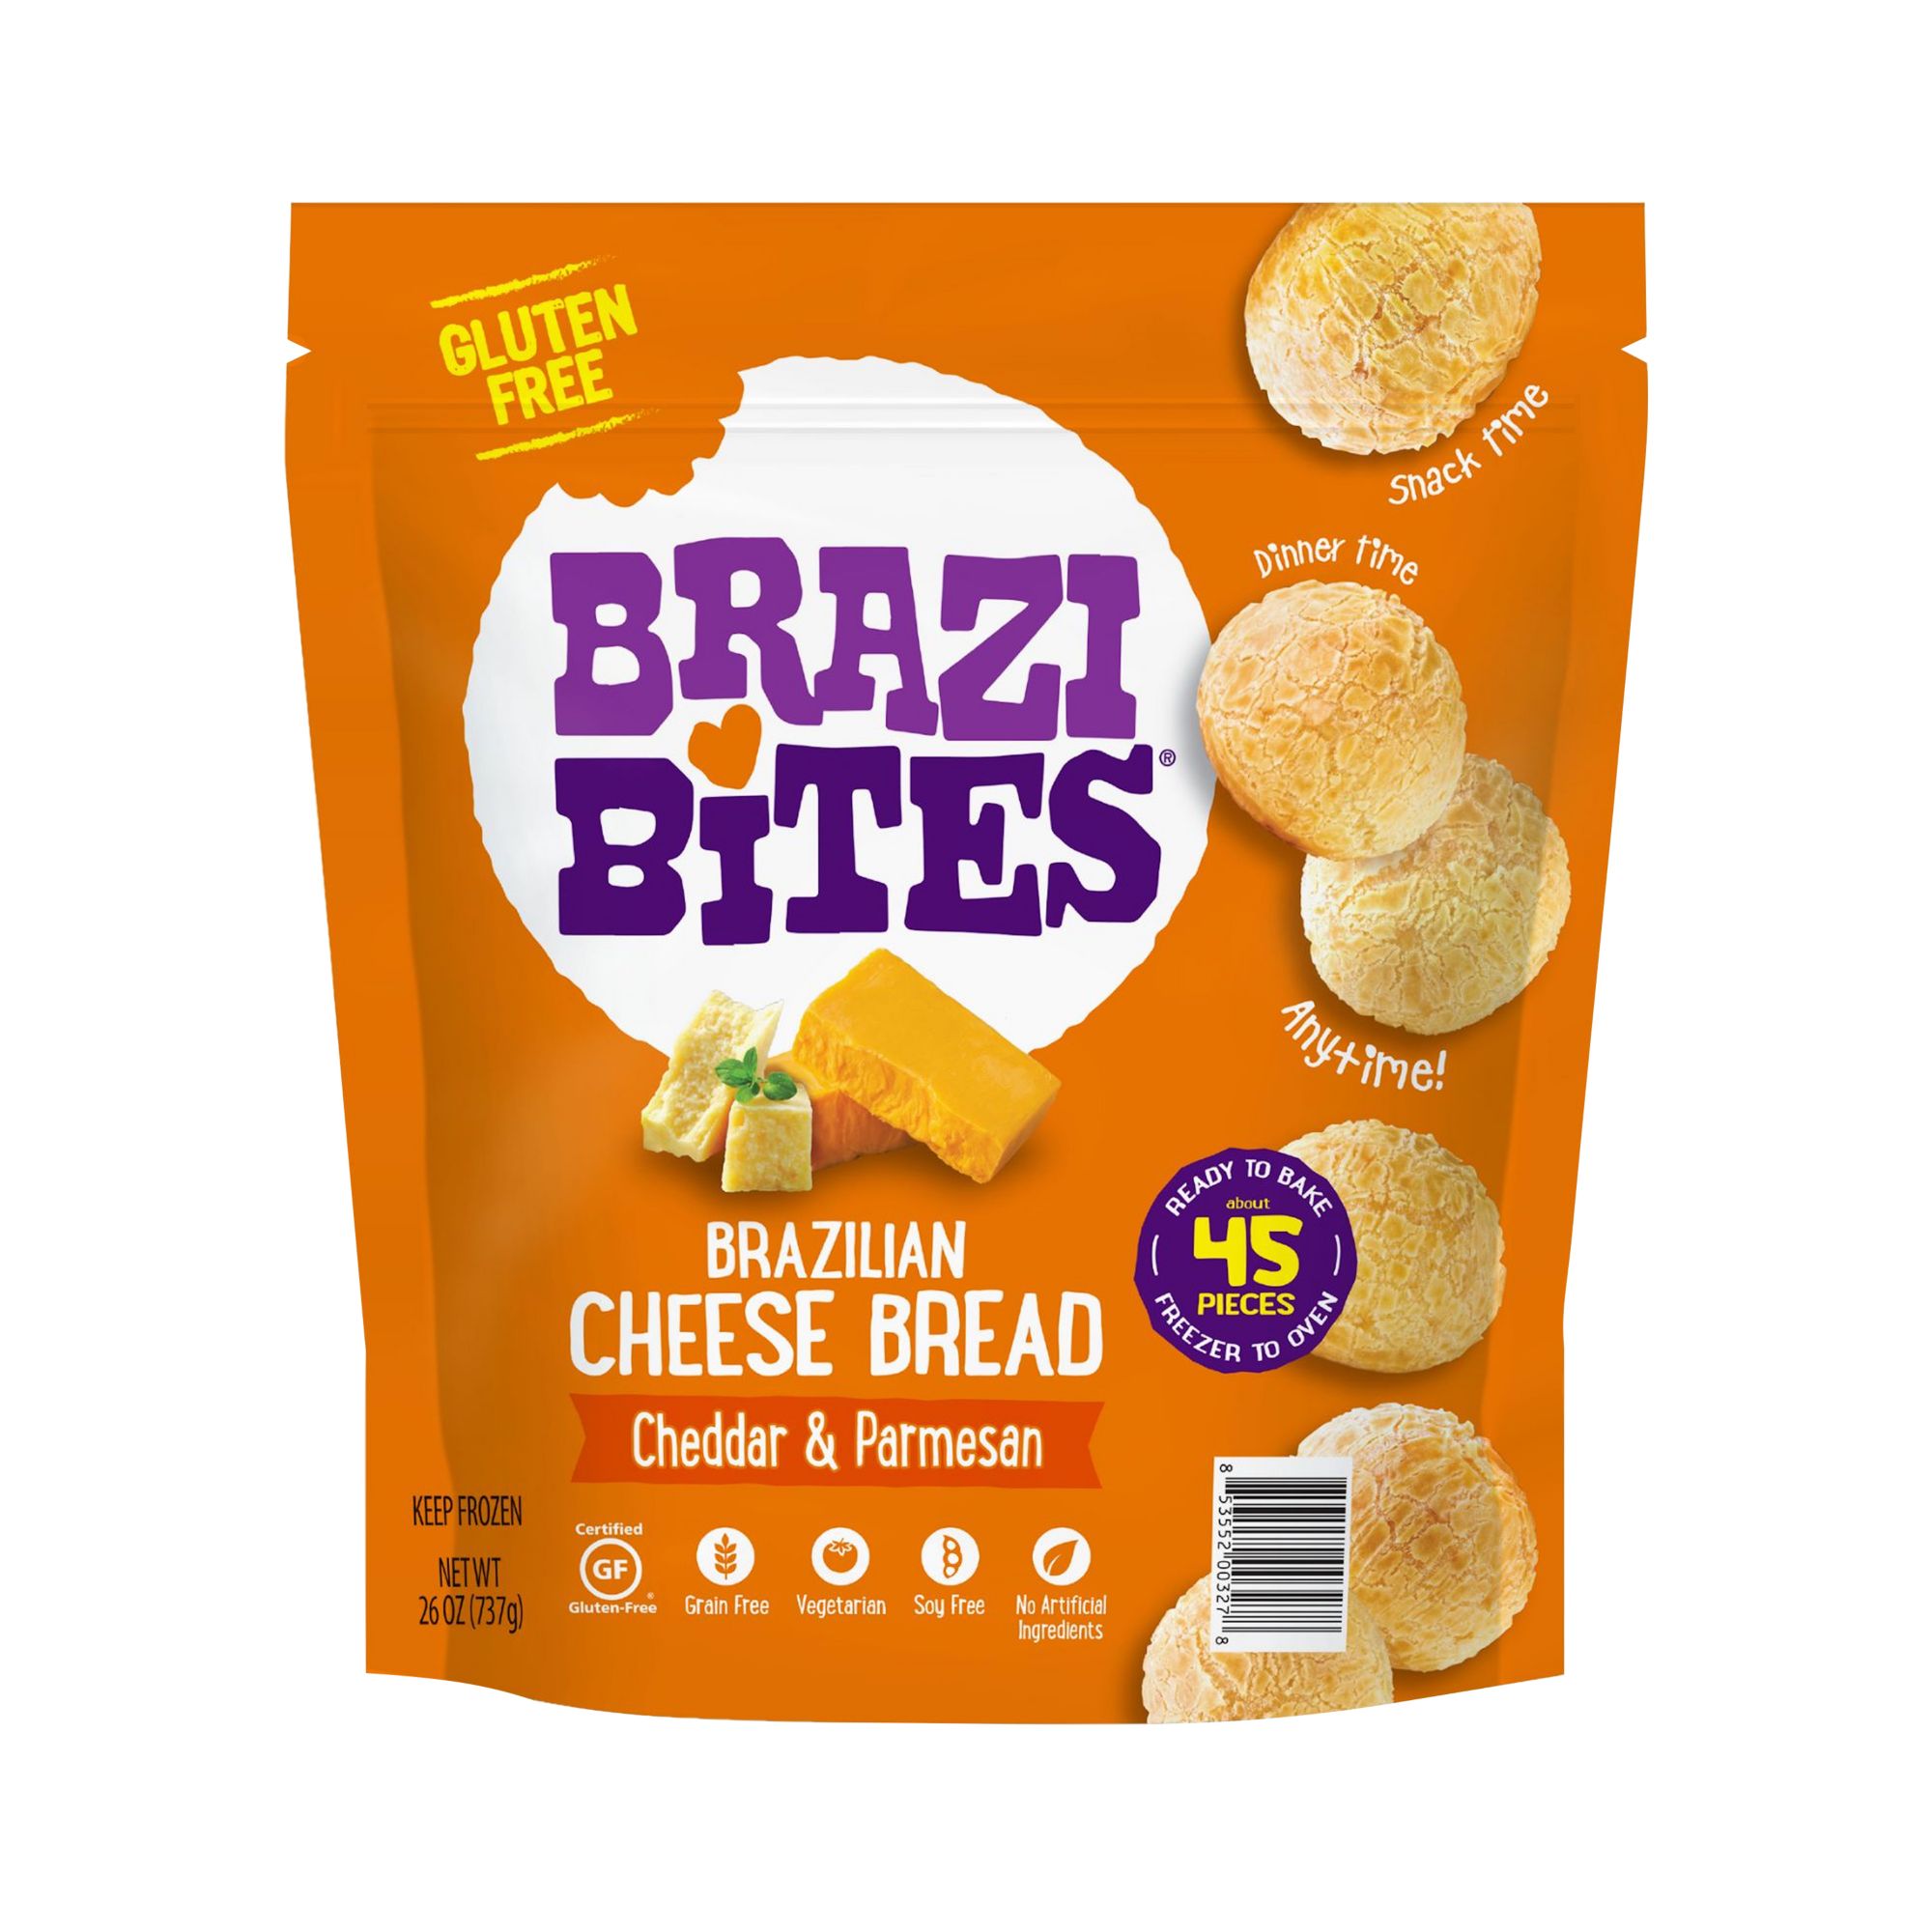 Brazi Bites Gluten-Free Cheddar & Parmesan Cheese Bread, 26 oz.